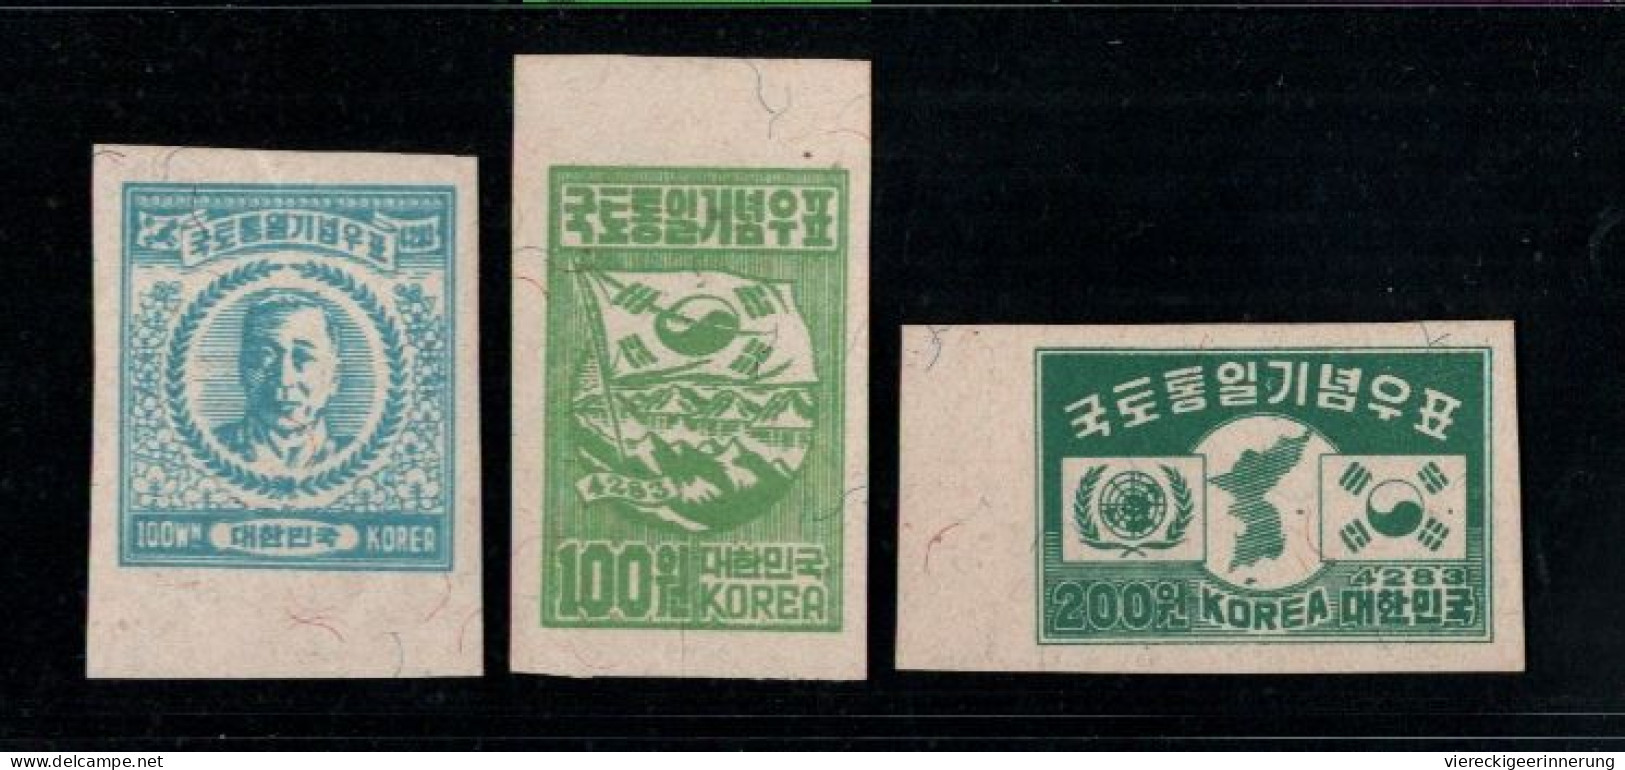 ! Coree, Asia, Asien, 1950 South Korea Unification stamps Nr.69-71 U (*) aus Südkoreas Wiedervereinigungs Blocks 19-21